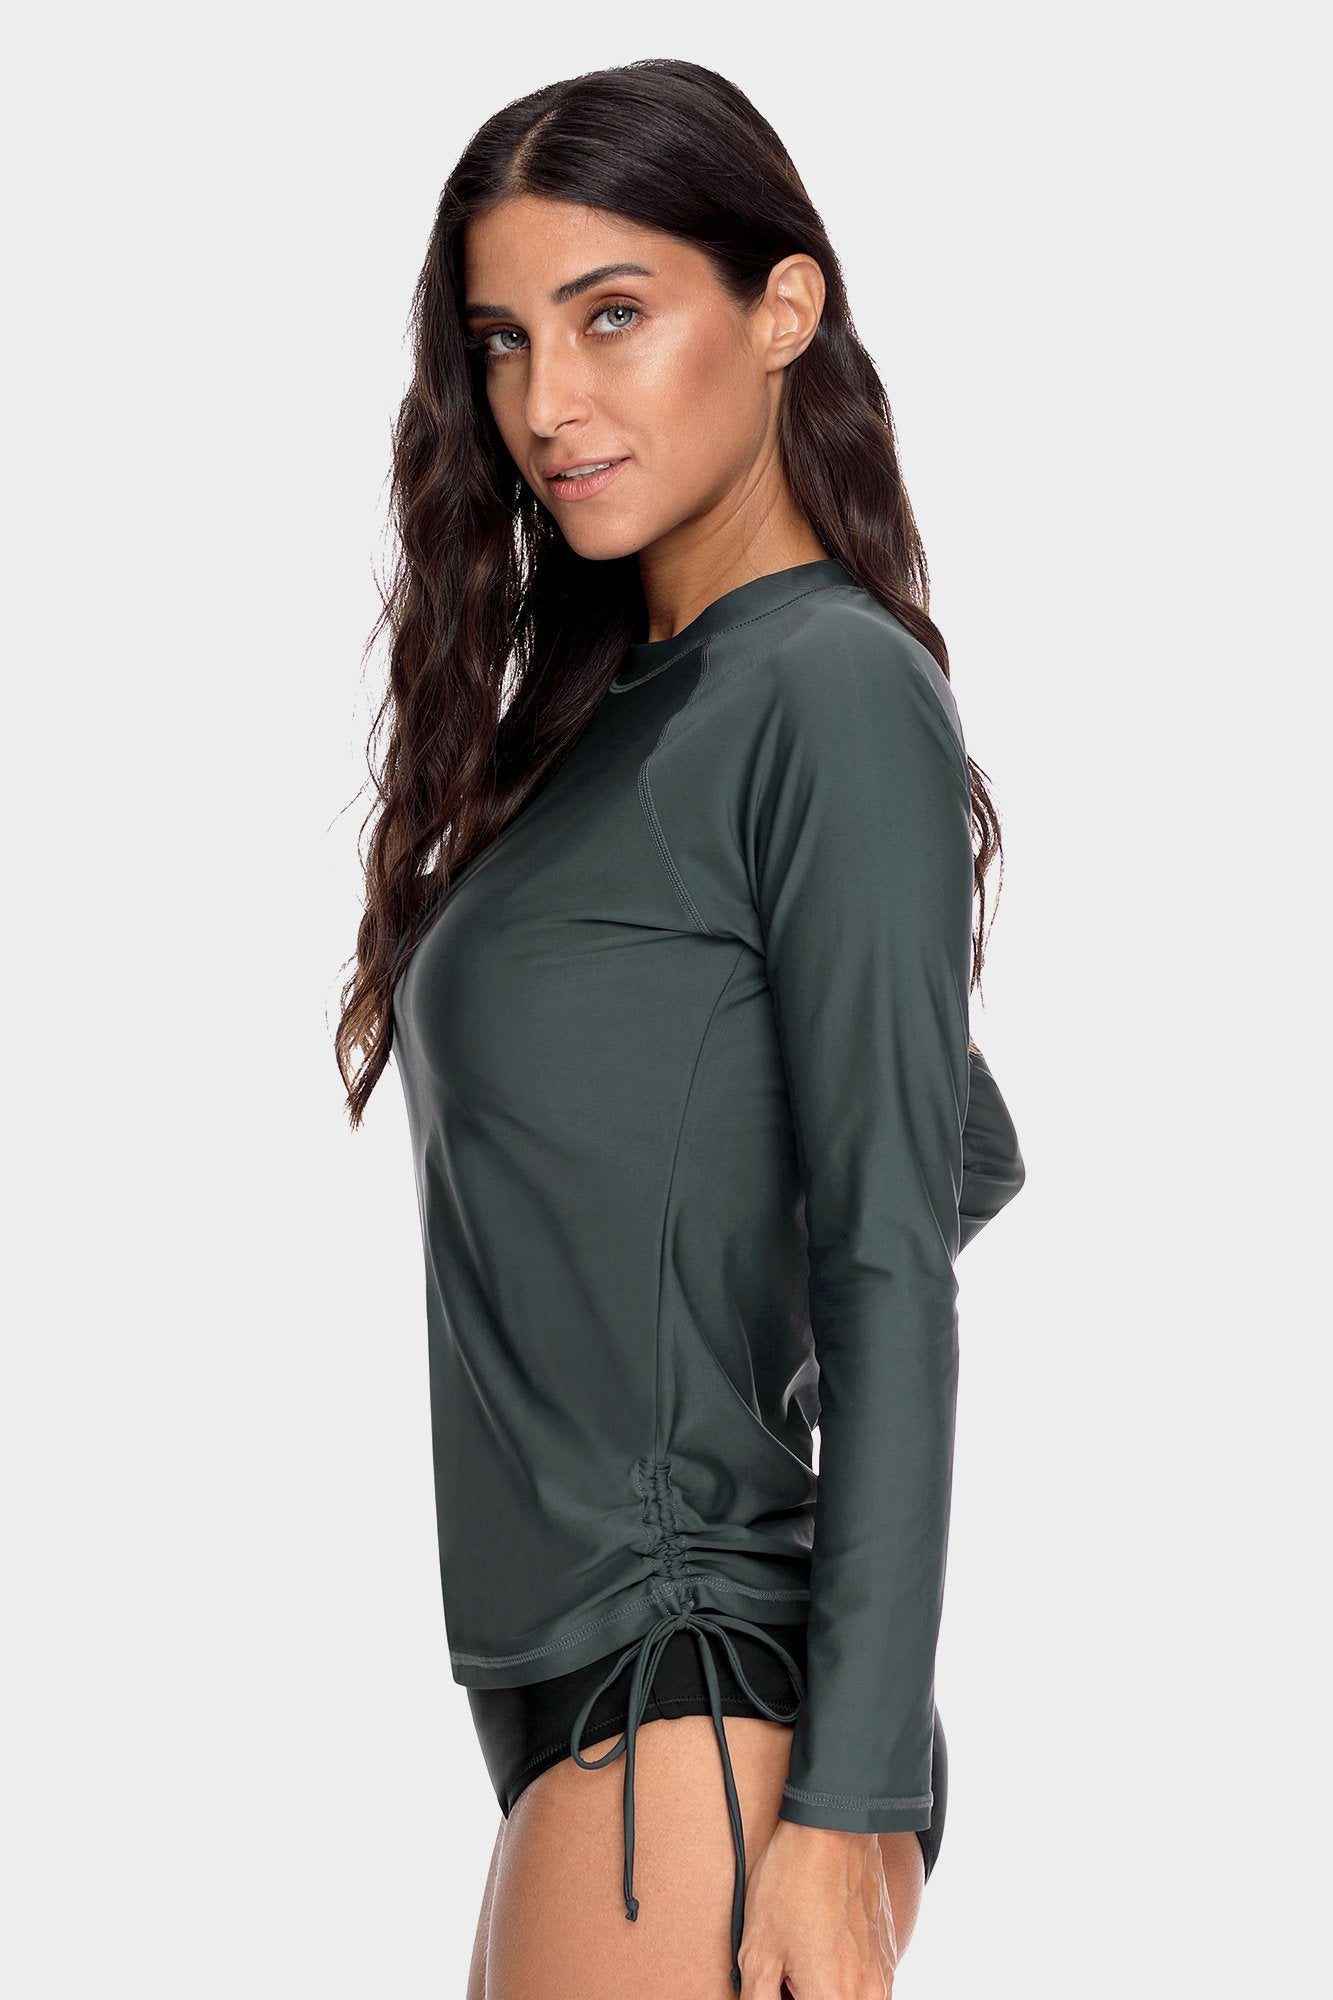 Women's Solid Grey Side Drawstring Long Sleeve UPF 50+ Rashguard-Attraco | Fashion Outdoor Clothing